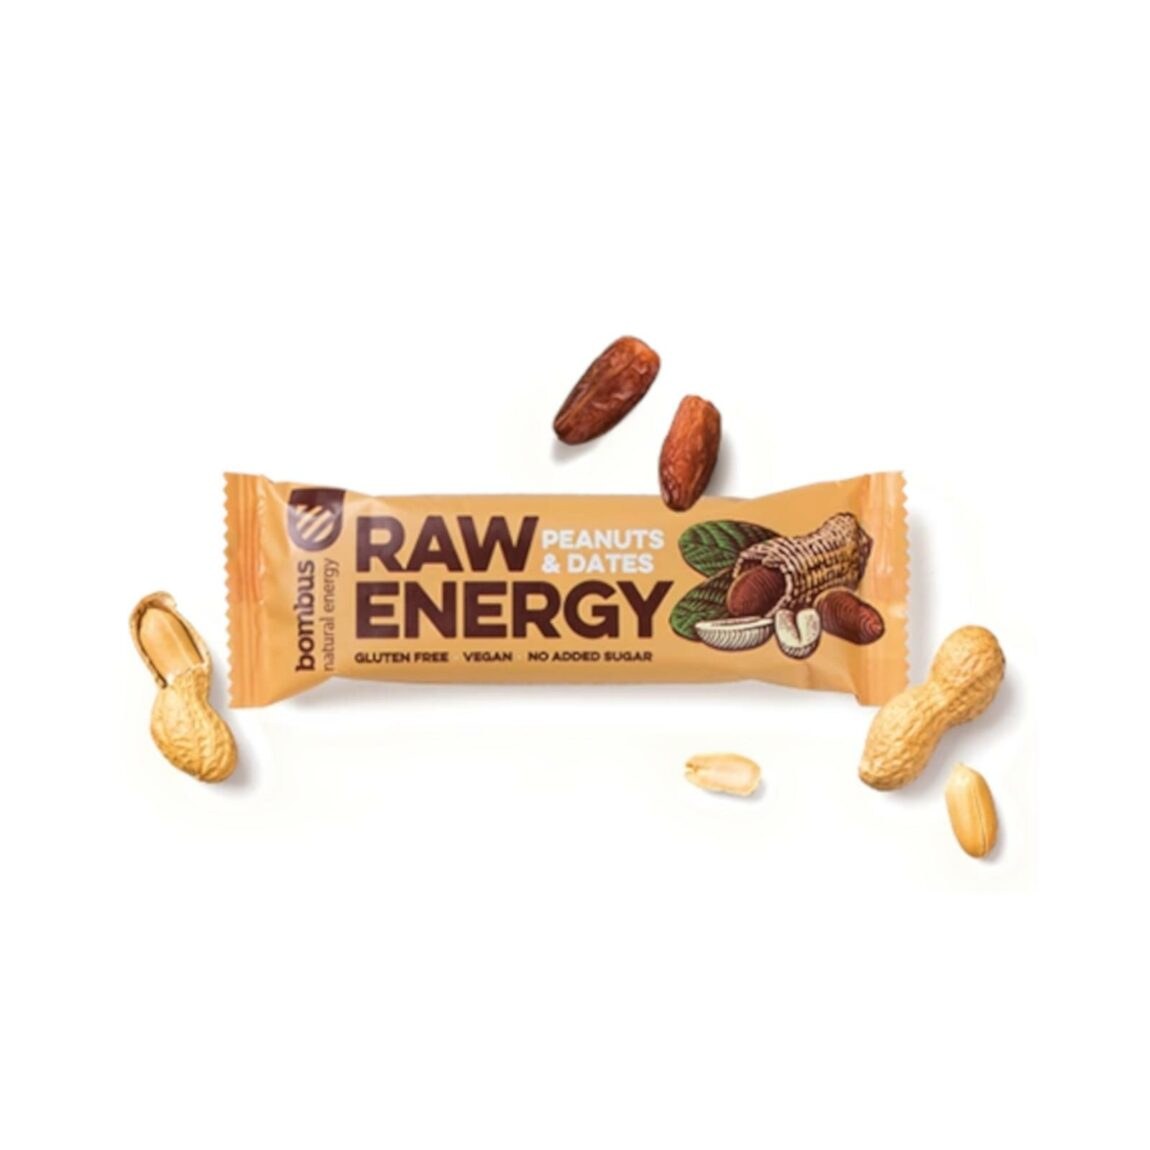 Bombus Raw energy -Peanut+dates